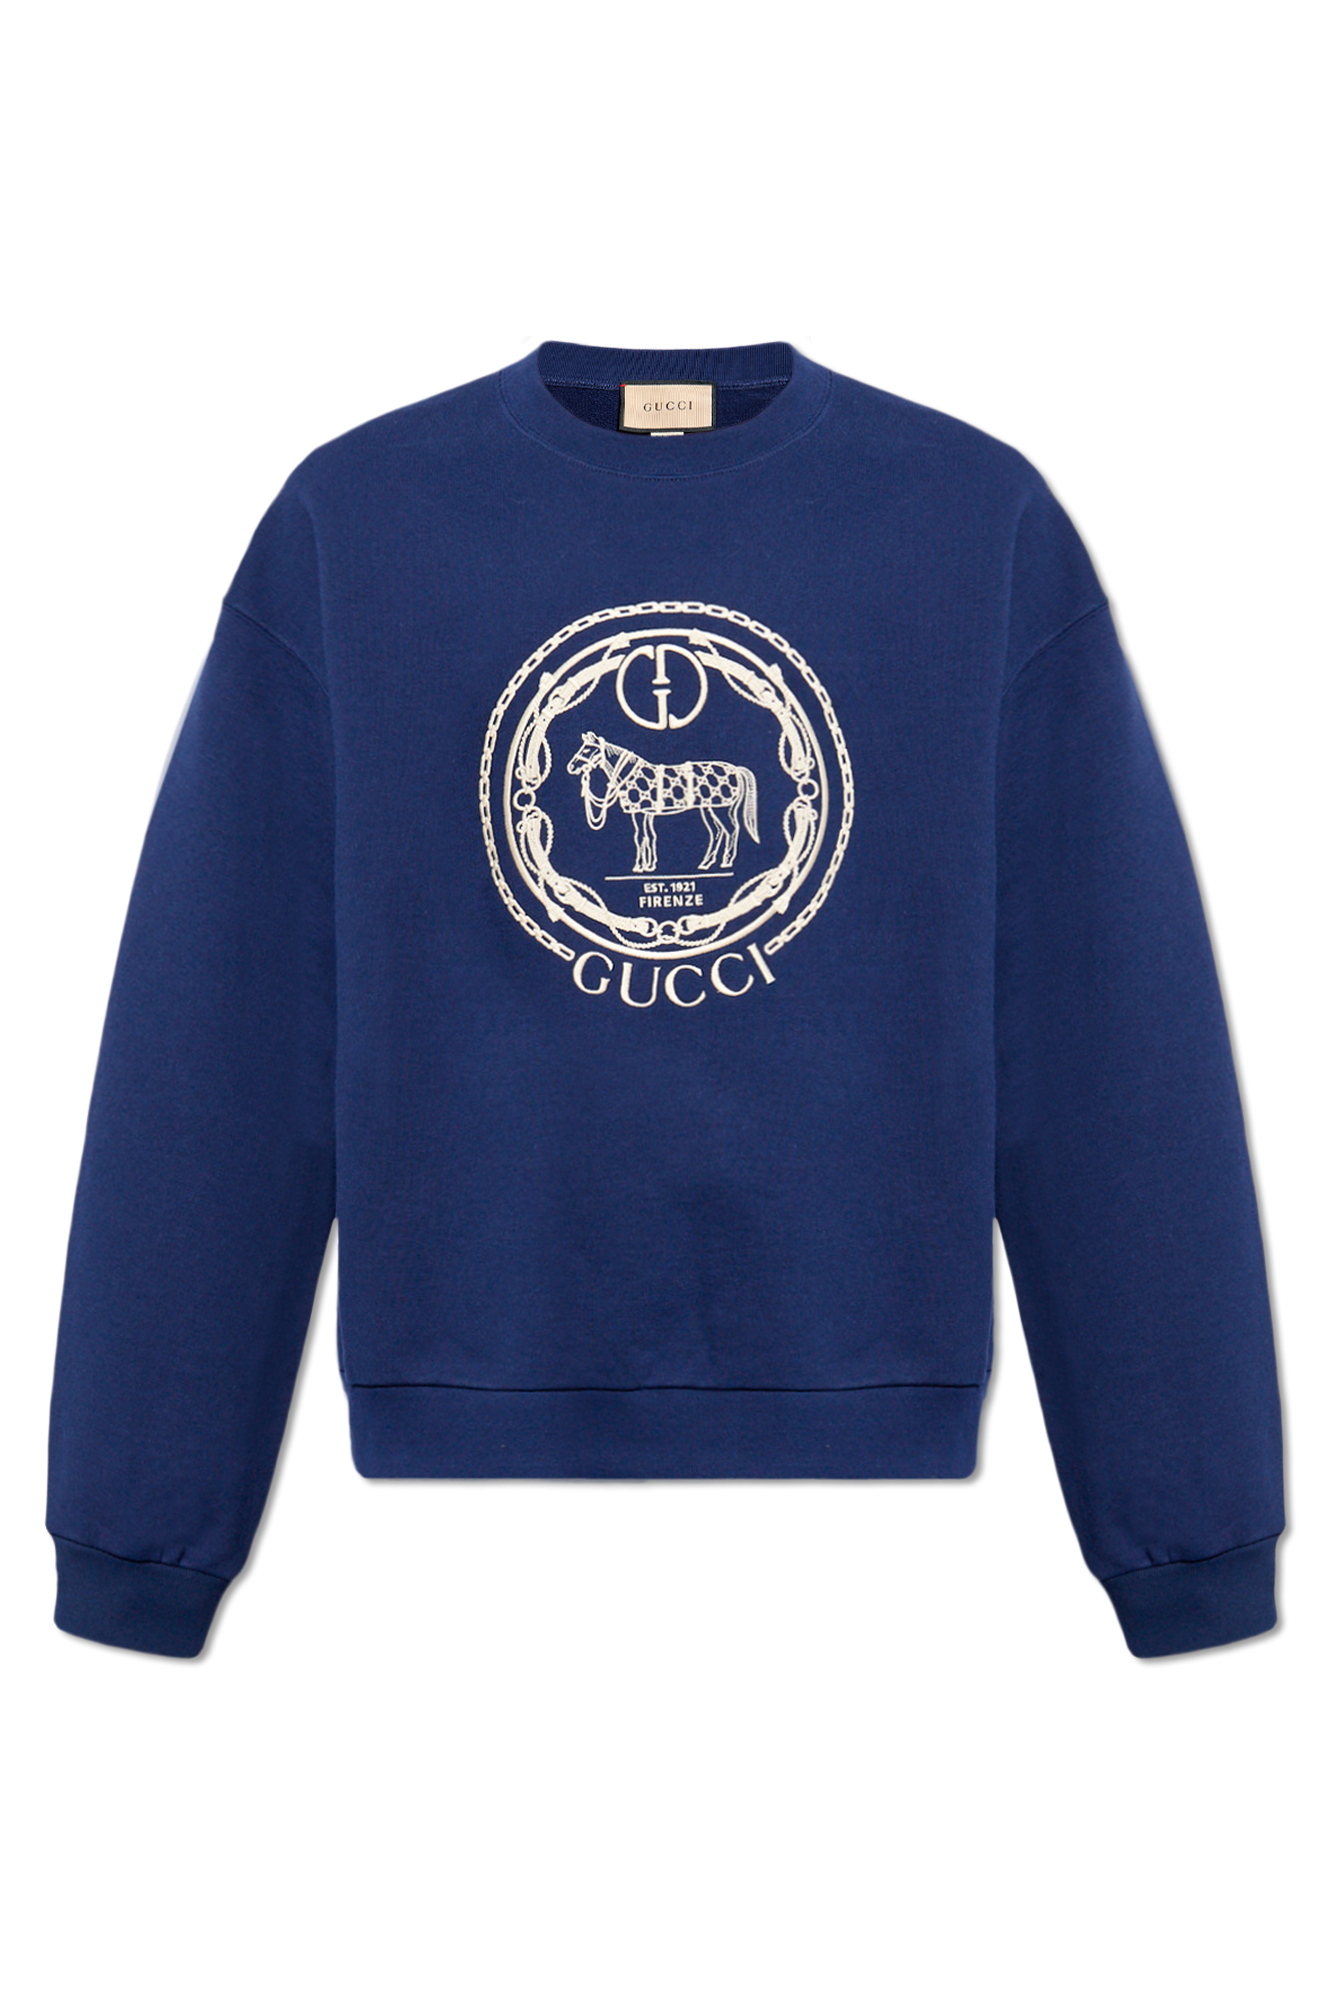 Navy blue Sweatshirt with logo Gucci - Vitkac Italy